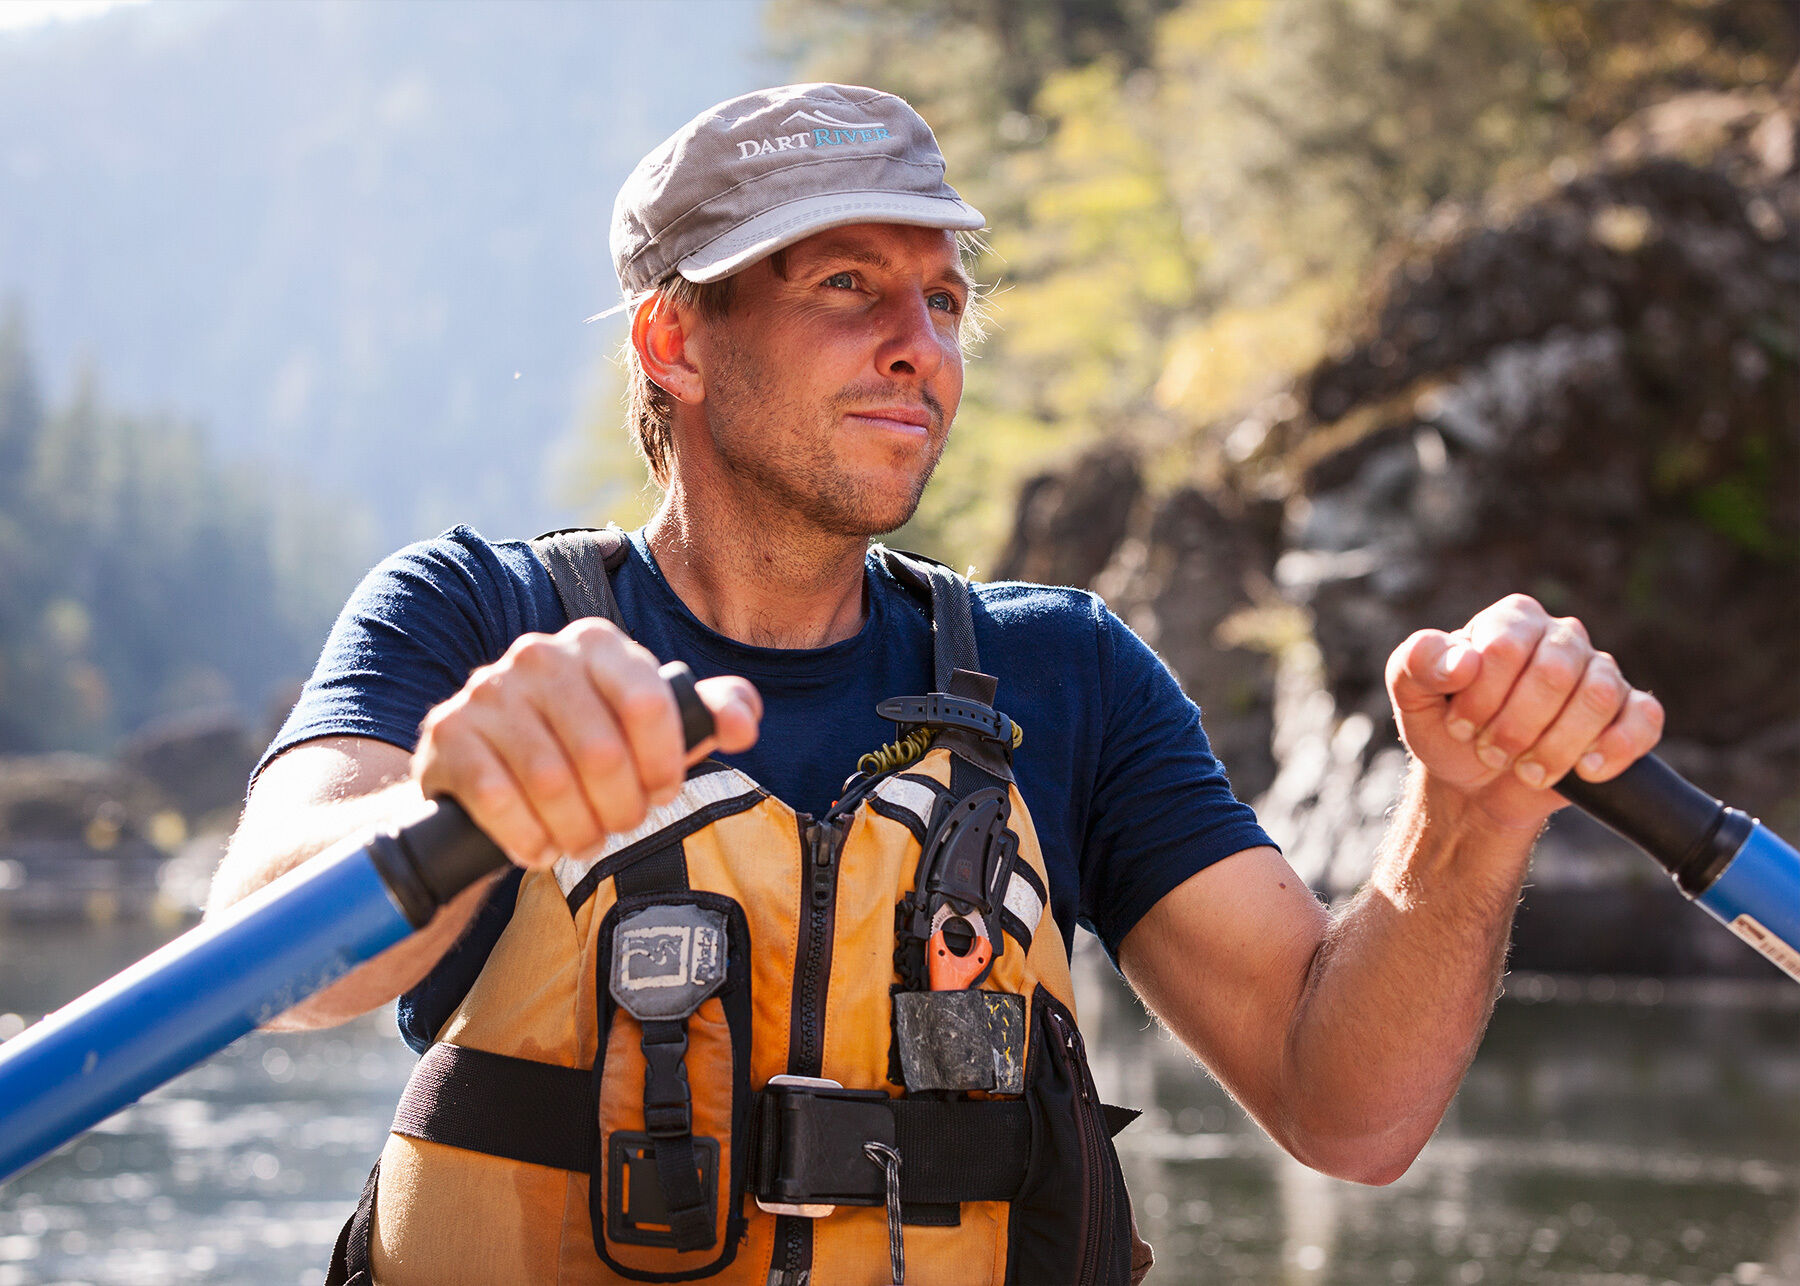 Daniel guiding a rafting trip down the Rogue River in Oregon